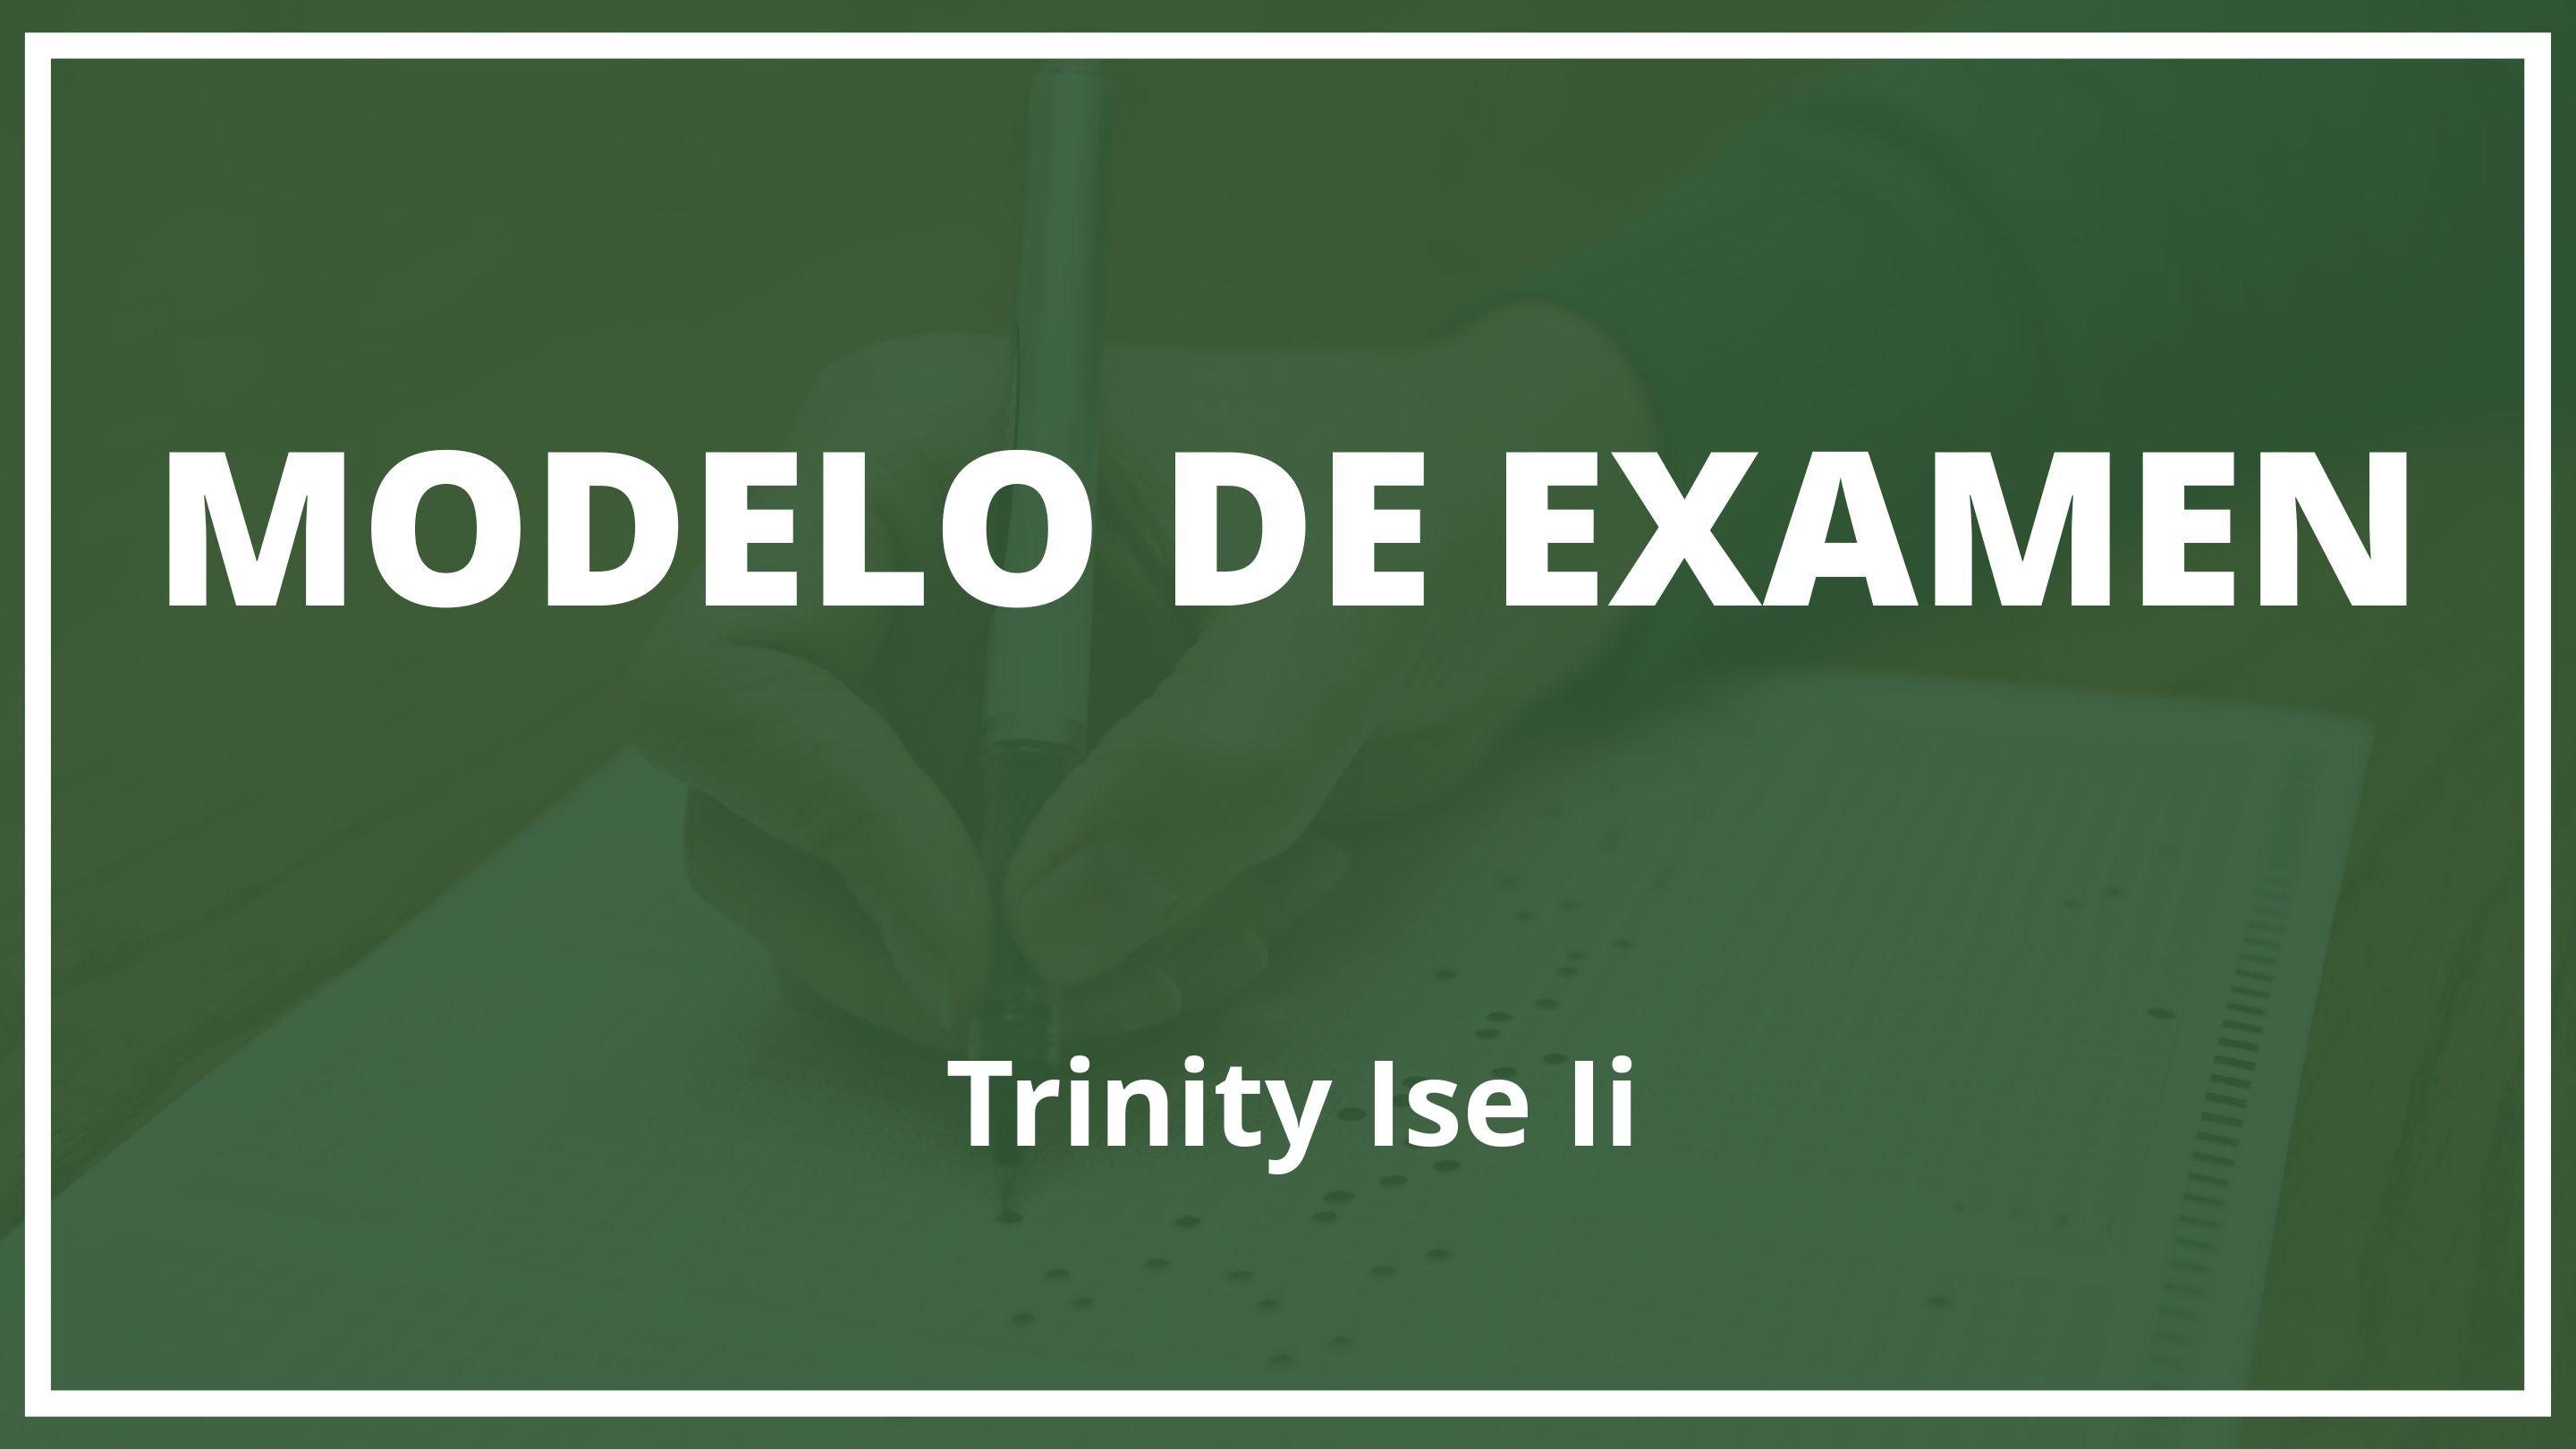 Examen Trinity Ise Ii